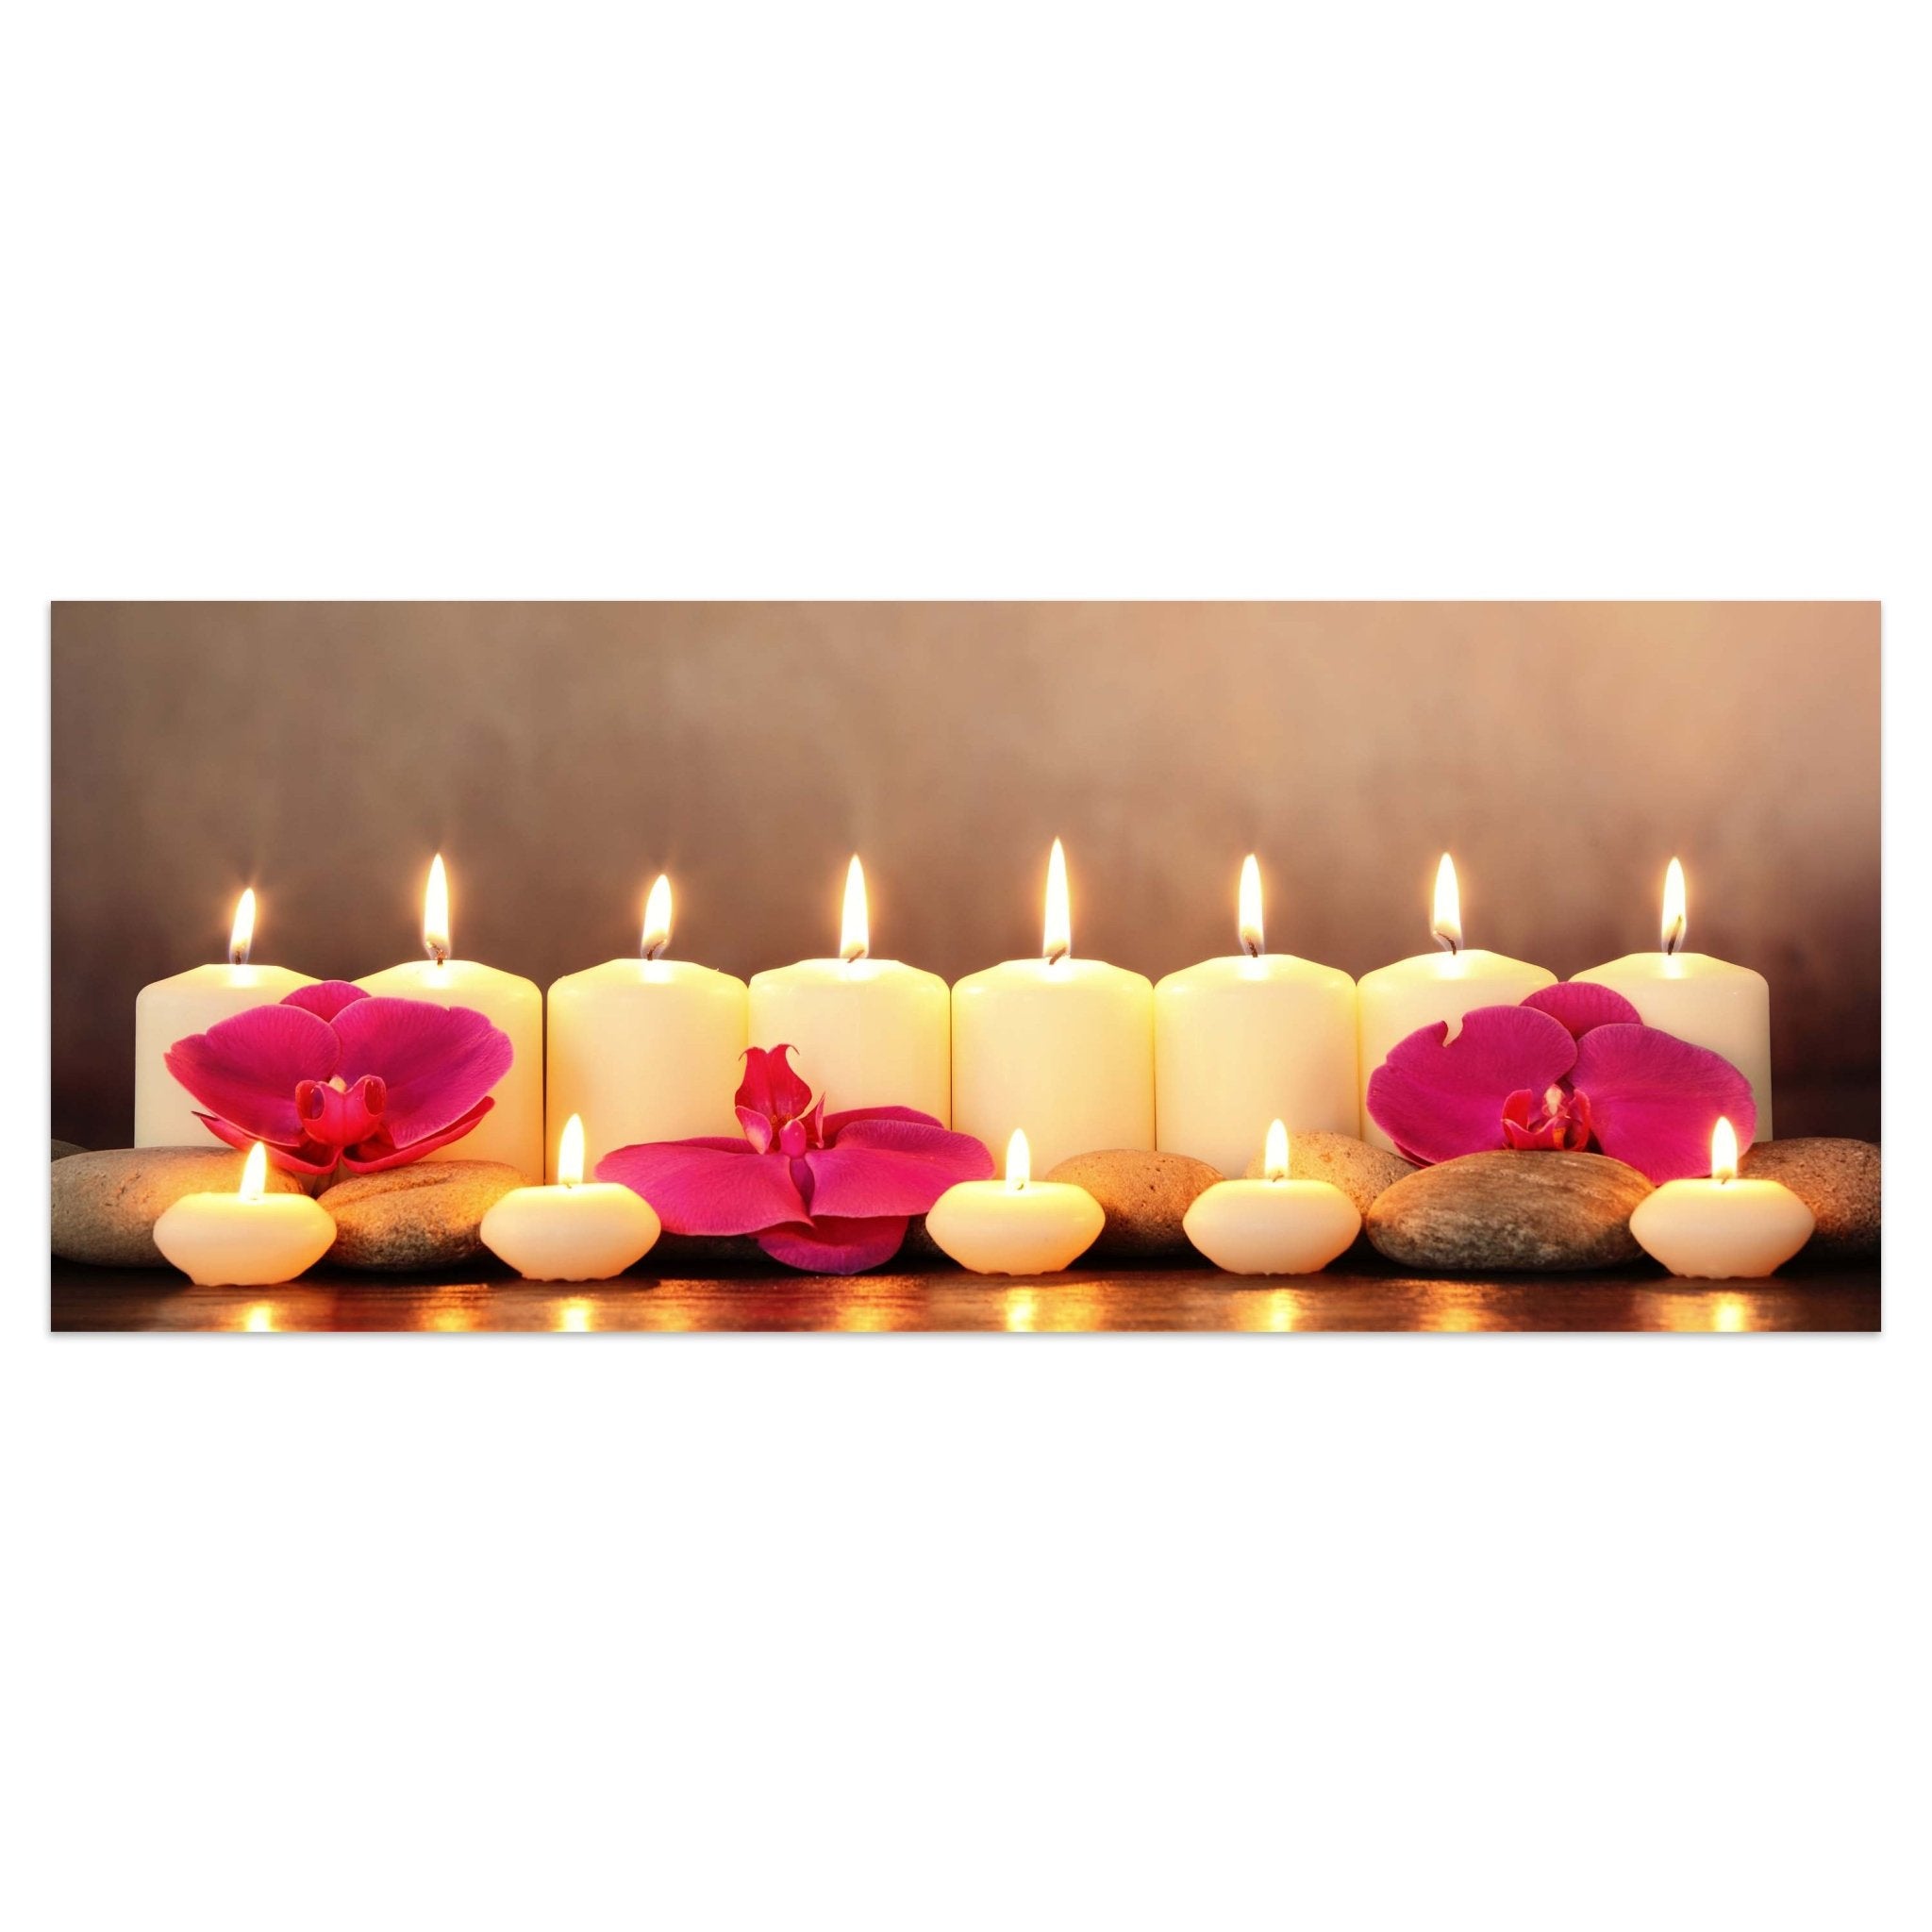 Leinwandbild Steine, Kerzen & Blüten, Wellness, Spa M1098 kaufen - Bild 1